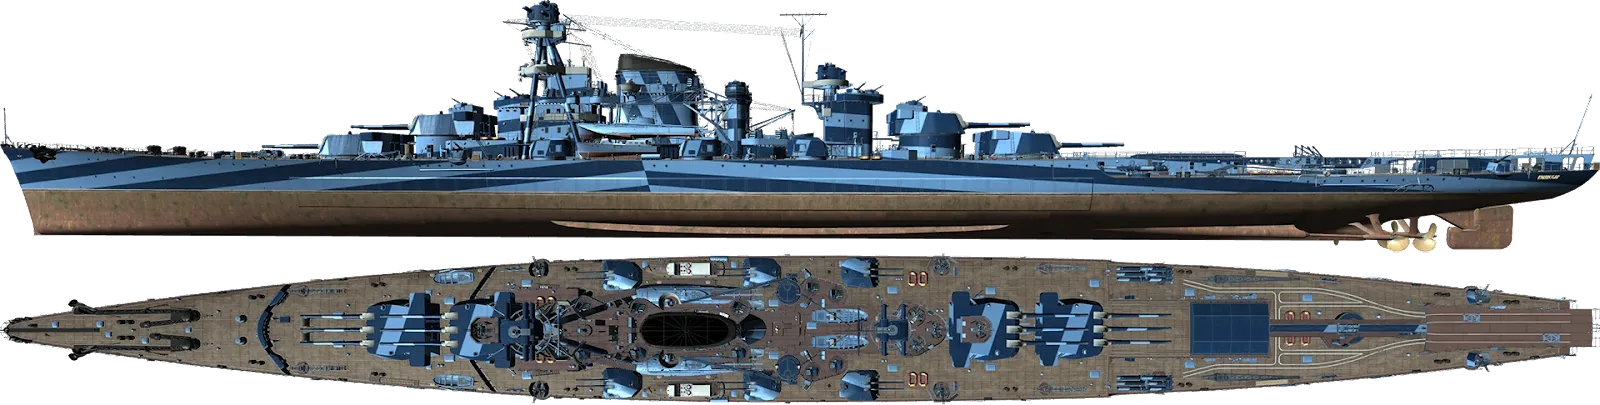 Imagen del buque de guerra Komissar Paint.